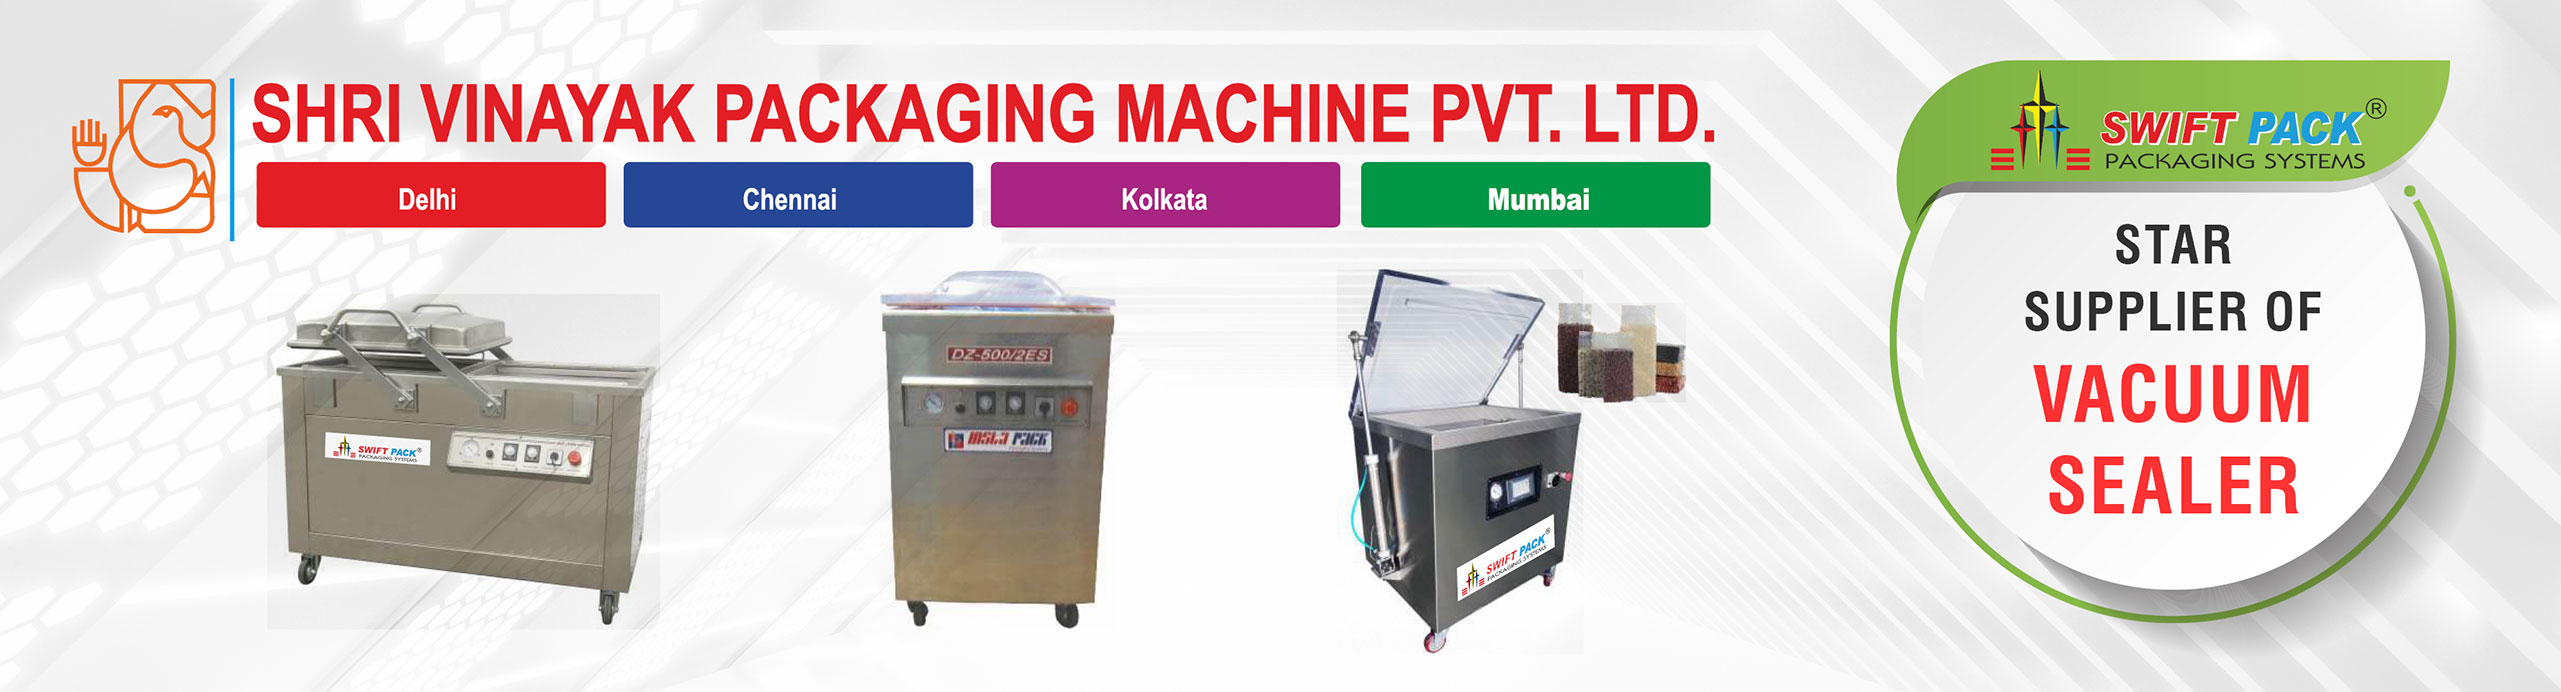 Shri Vinayak Packaging Machine Private Limited